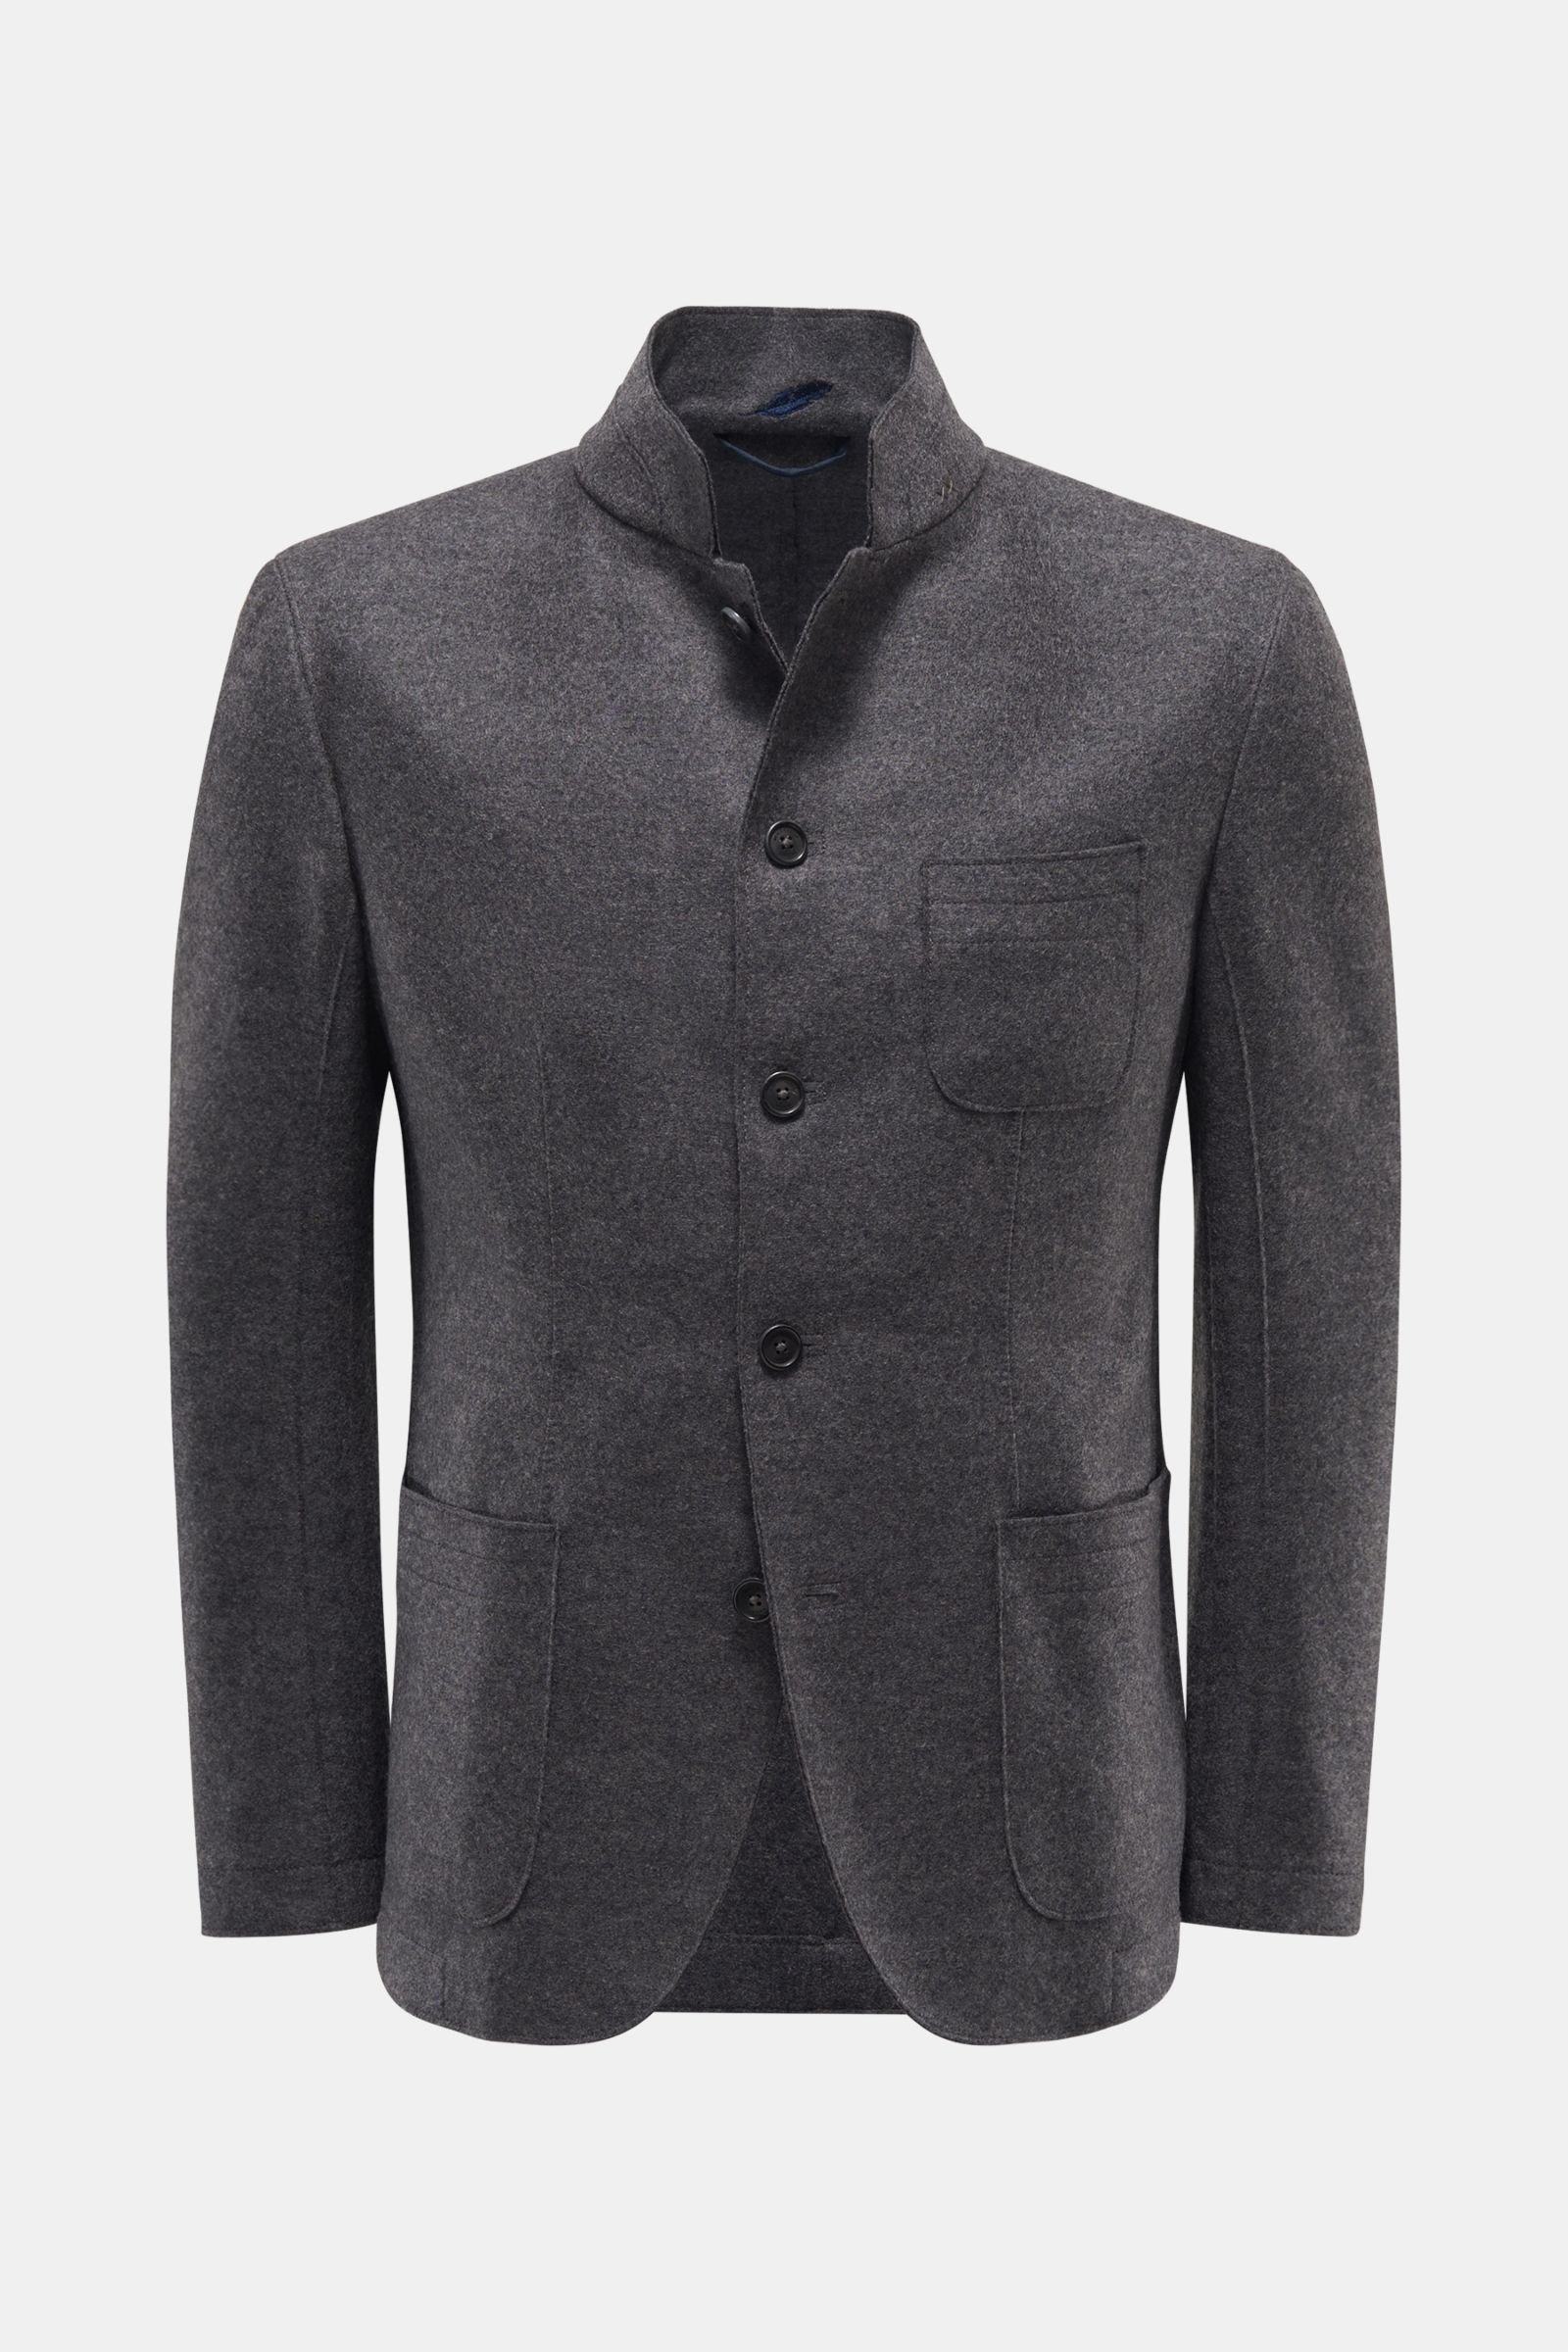 Smart-casual jacket 'Travel Blazer' dark grey